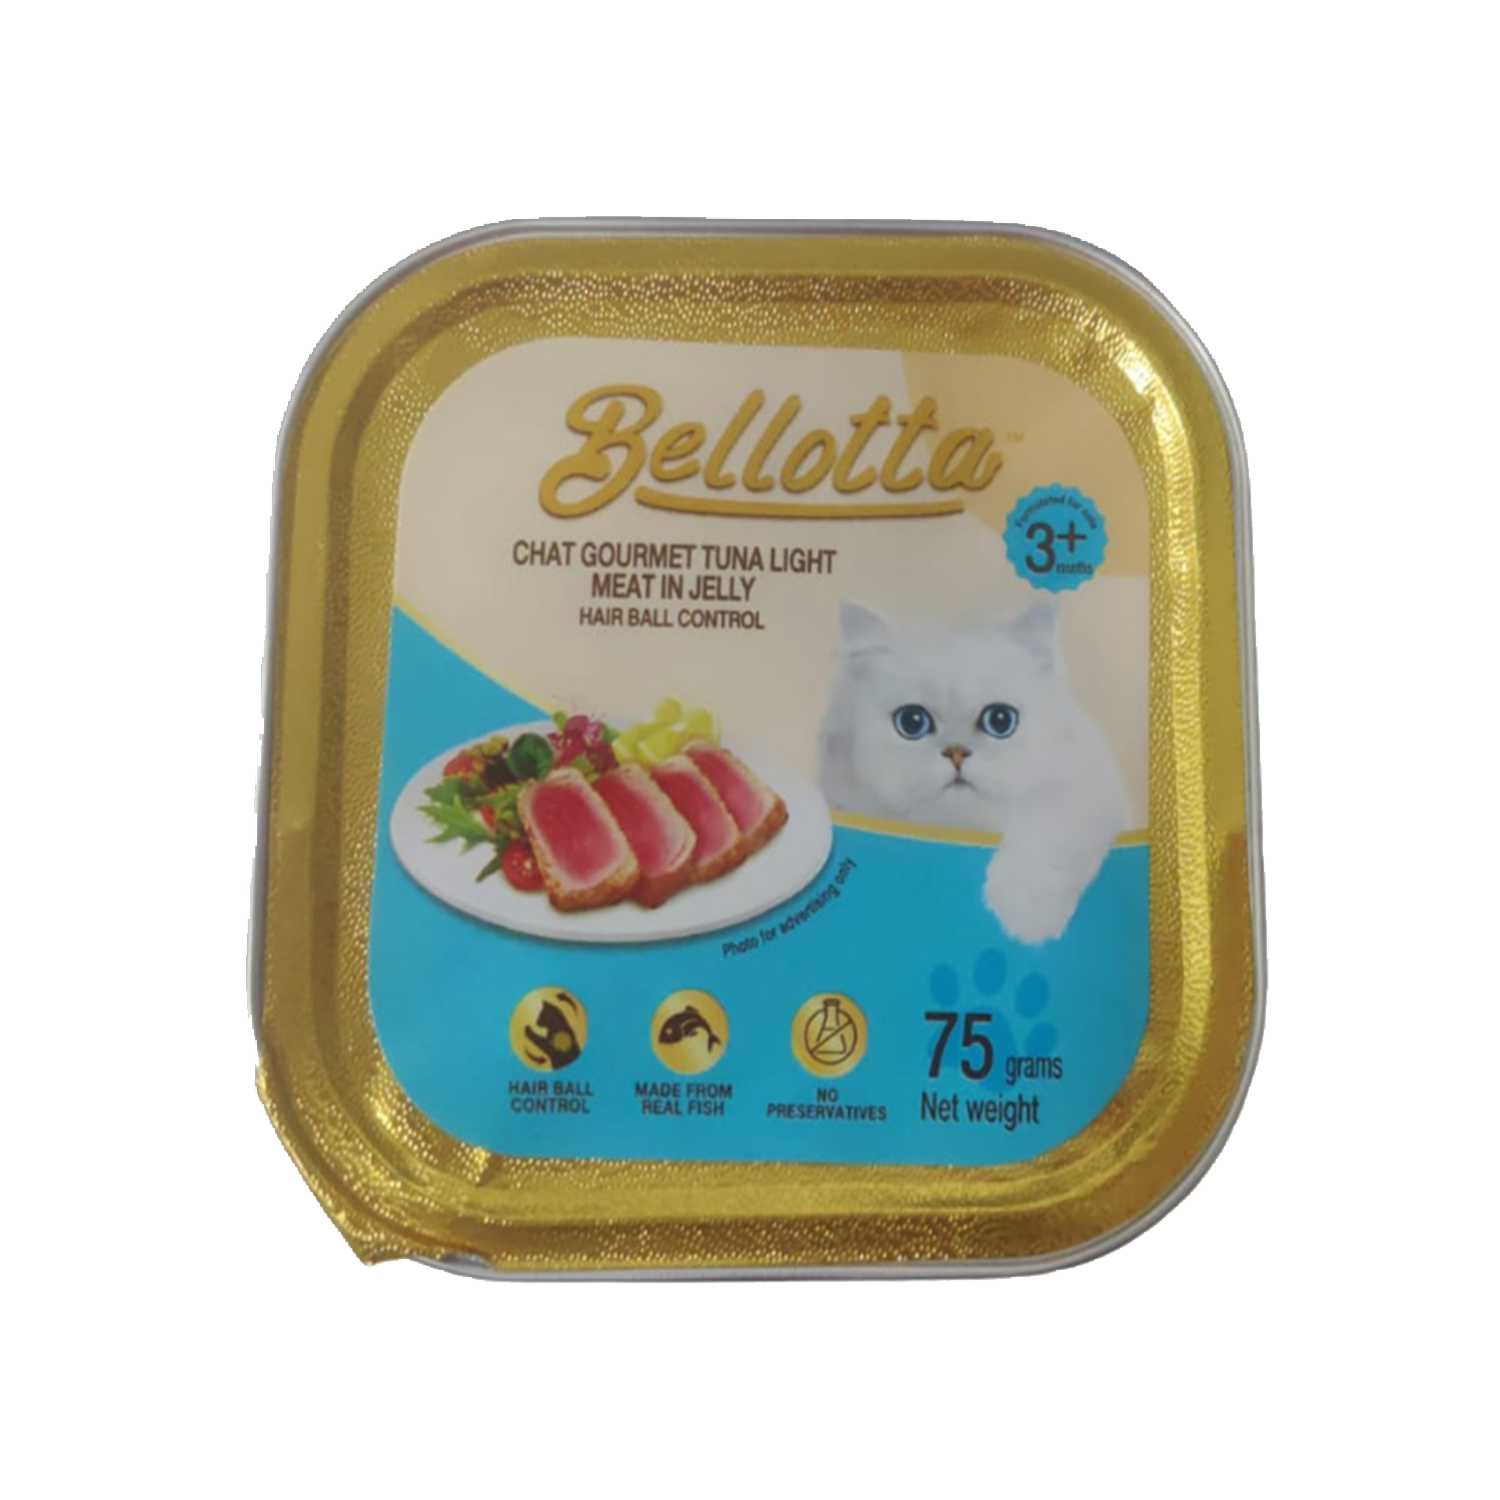 bellotta cat food